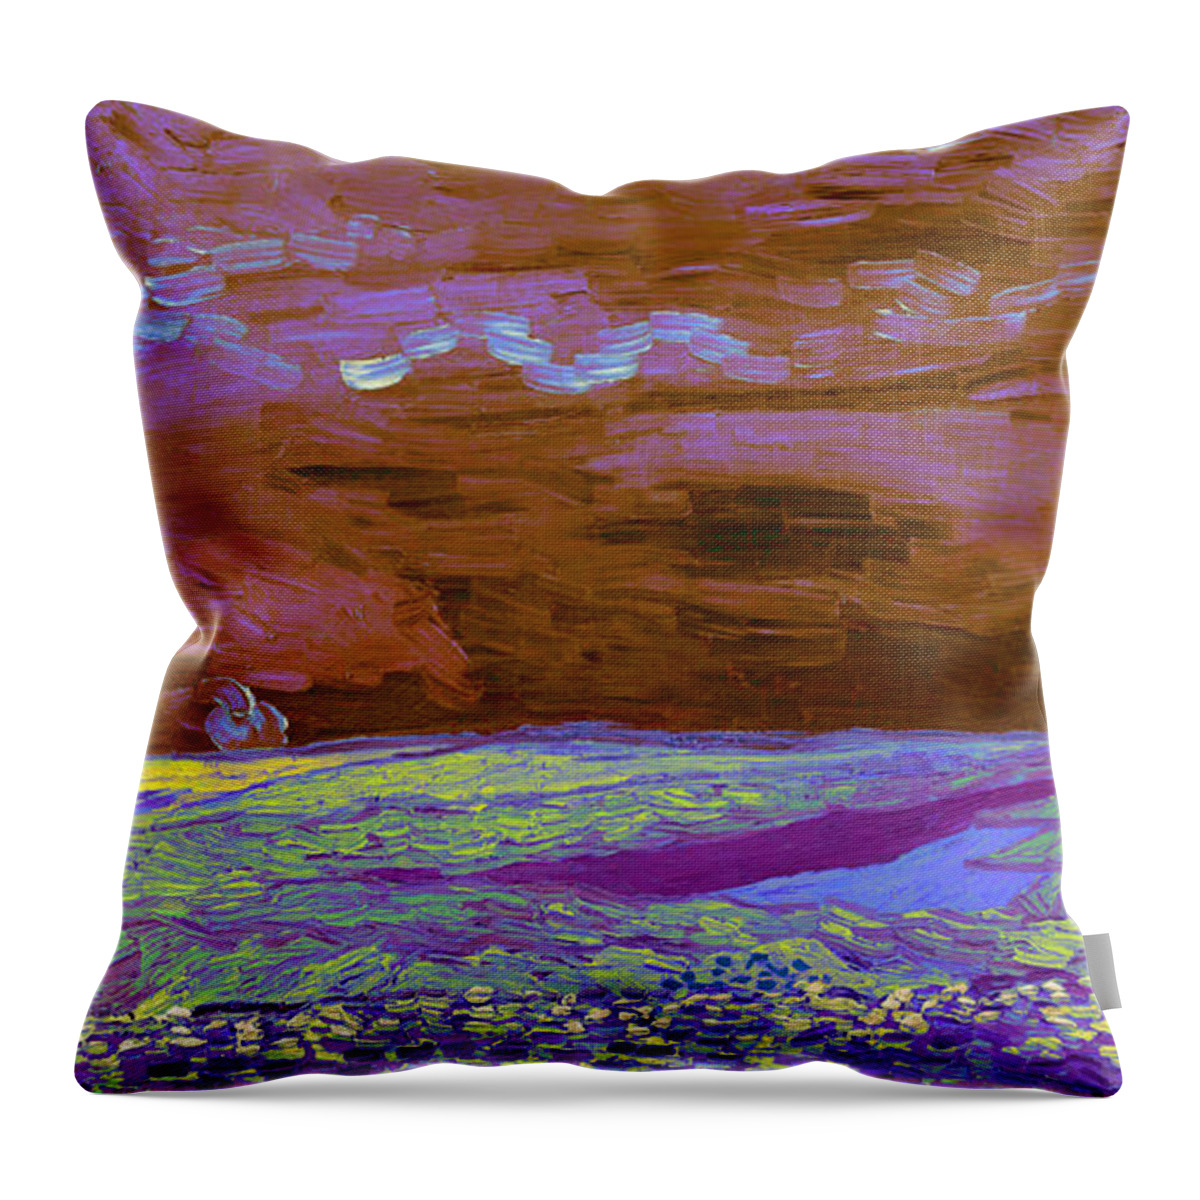 Post Modern Throw Pillow featuring the digital art Blend 18 van Gogh by David Bridburg